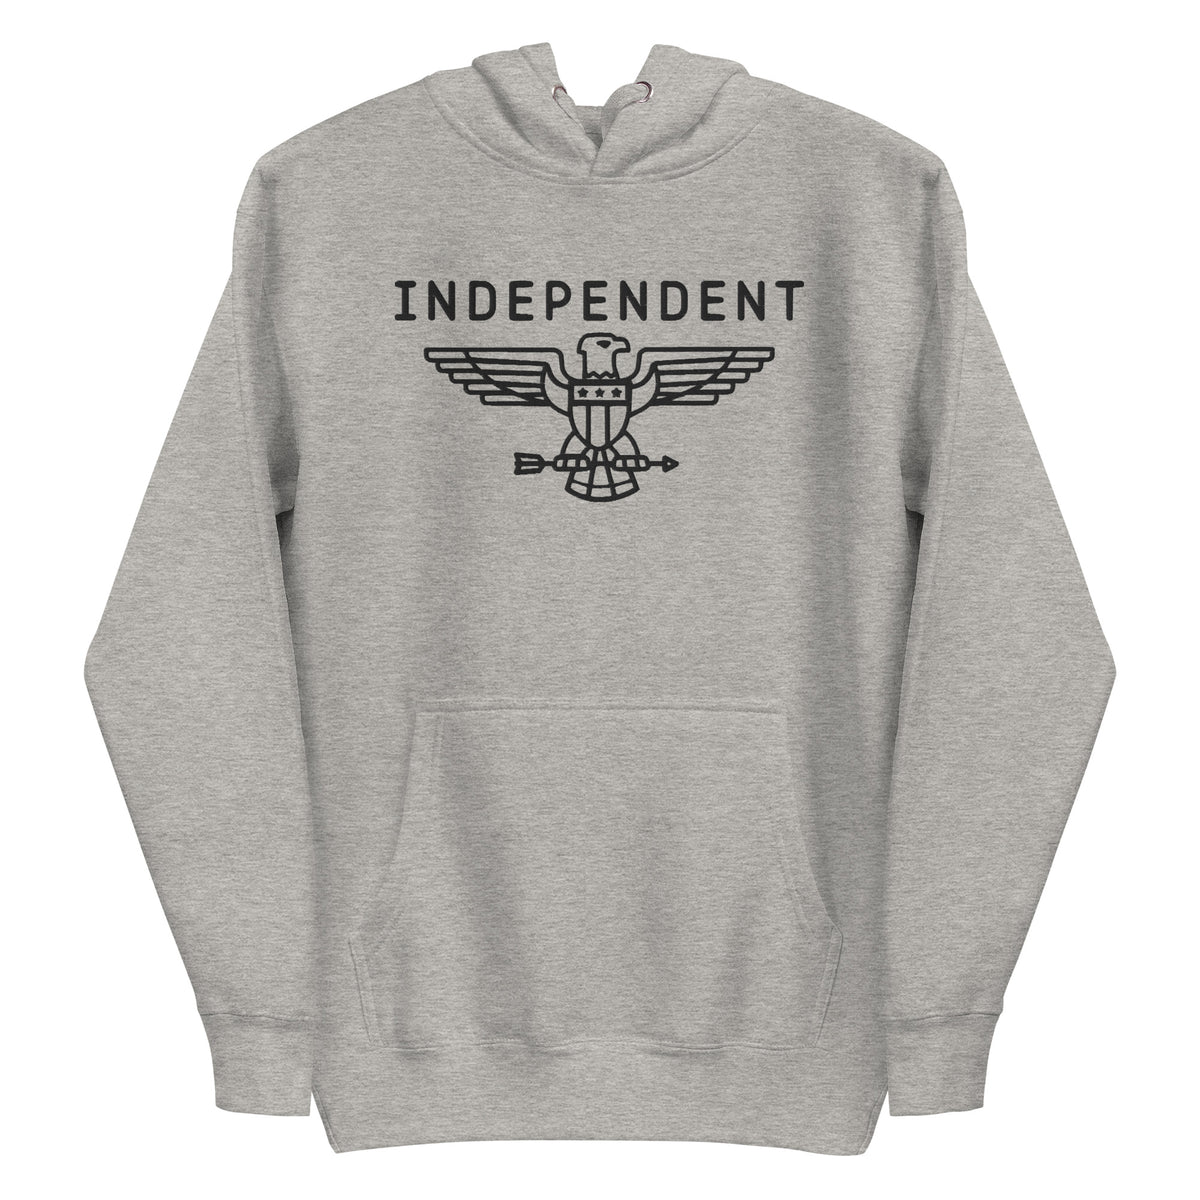 Eagles Crewneck Sweatshirt Tshirt Hoodie Unisex Embroidered